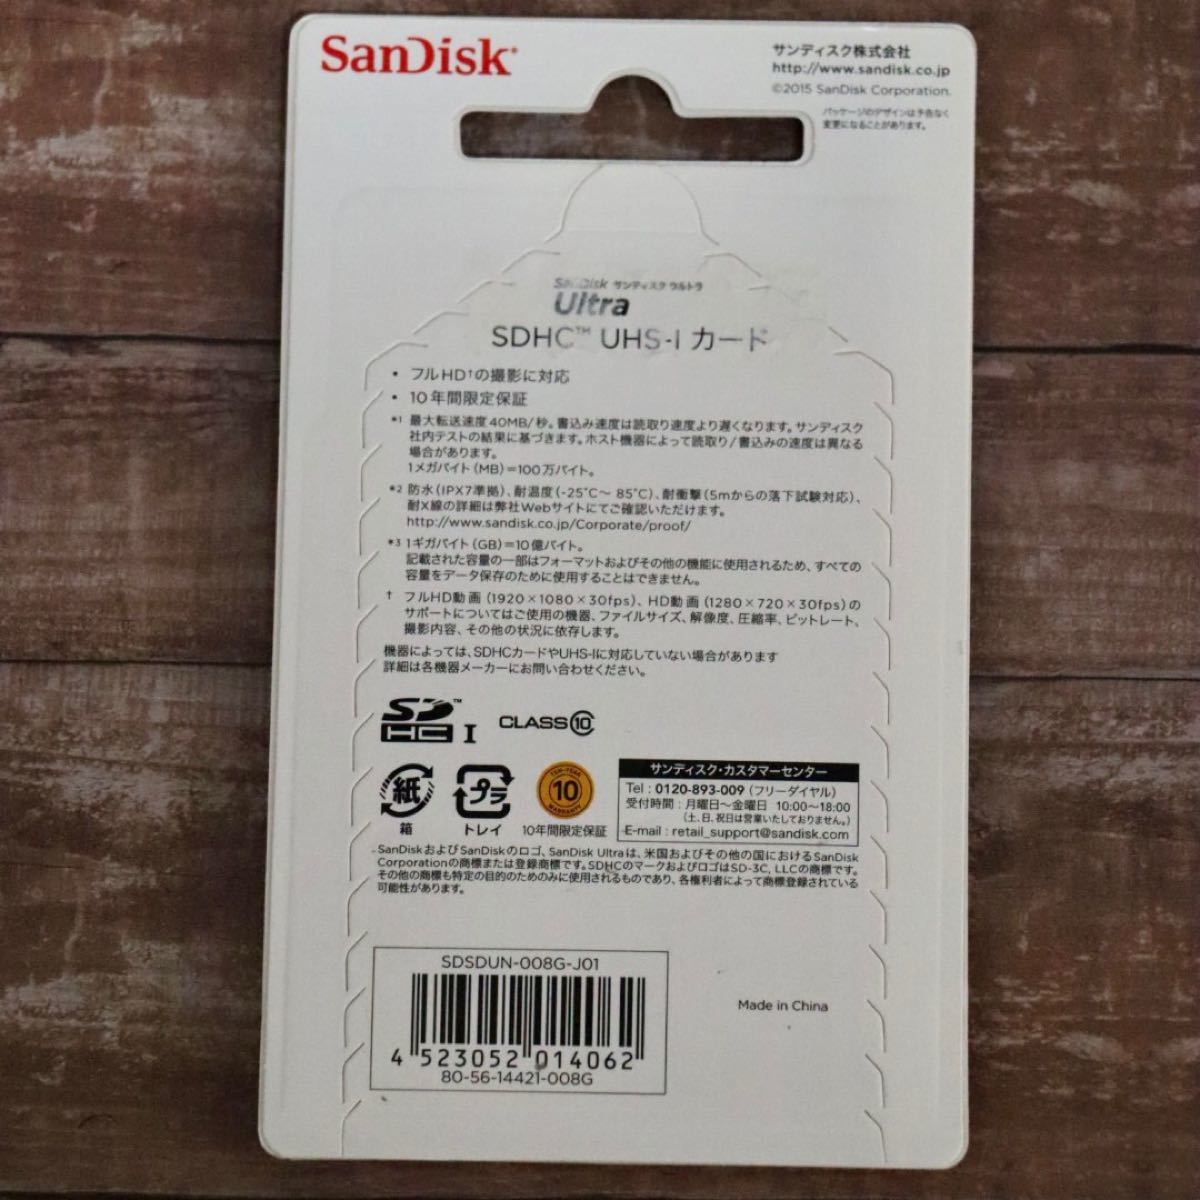 SanDisk/SDカード/SDHC/UHS-I/8GB/SDSDUN-008G-J01